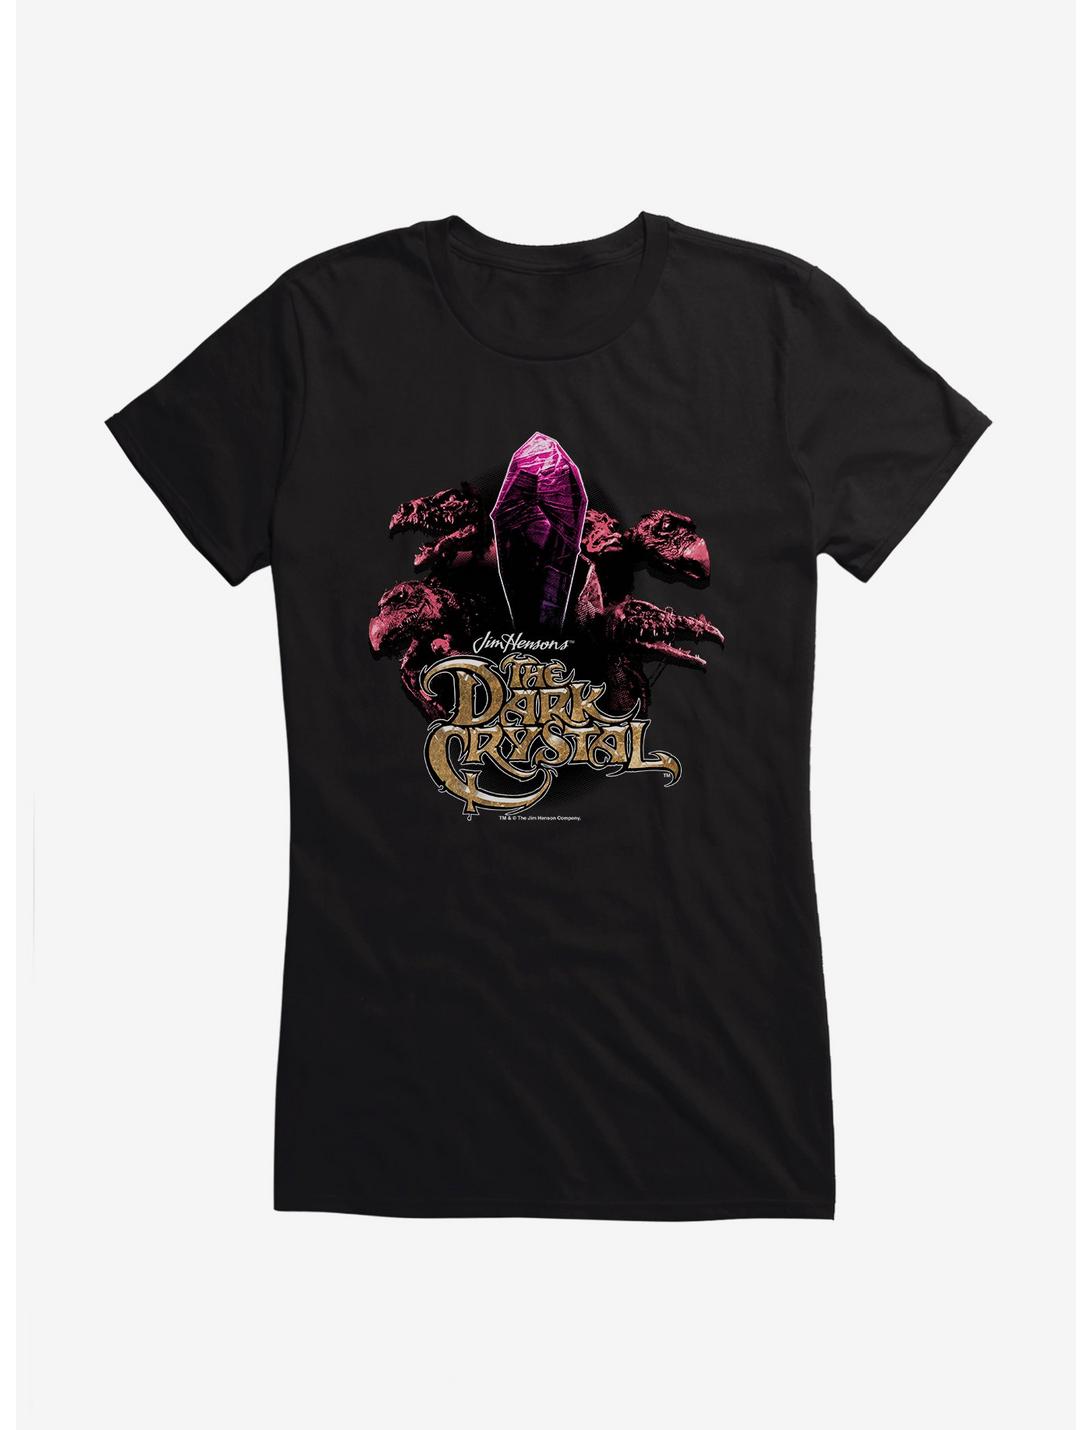 Jim Henson's The Dark Crystal Skeksis Girls T-Shirt, , hi-res